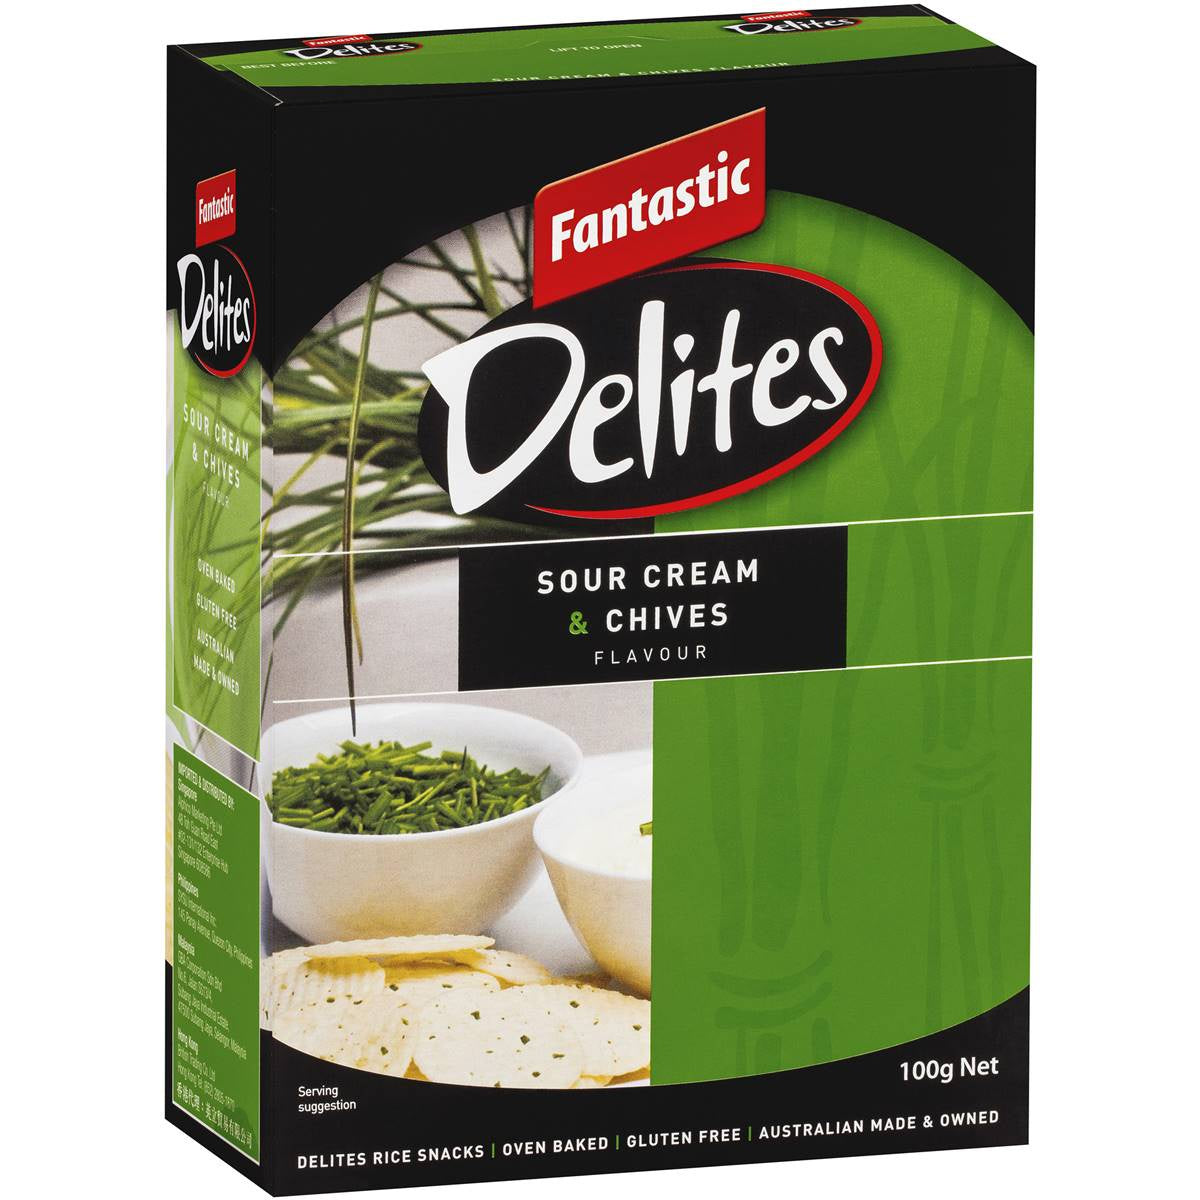 Fantastic Delites Sour Cream and Chives 100g